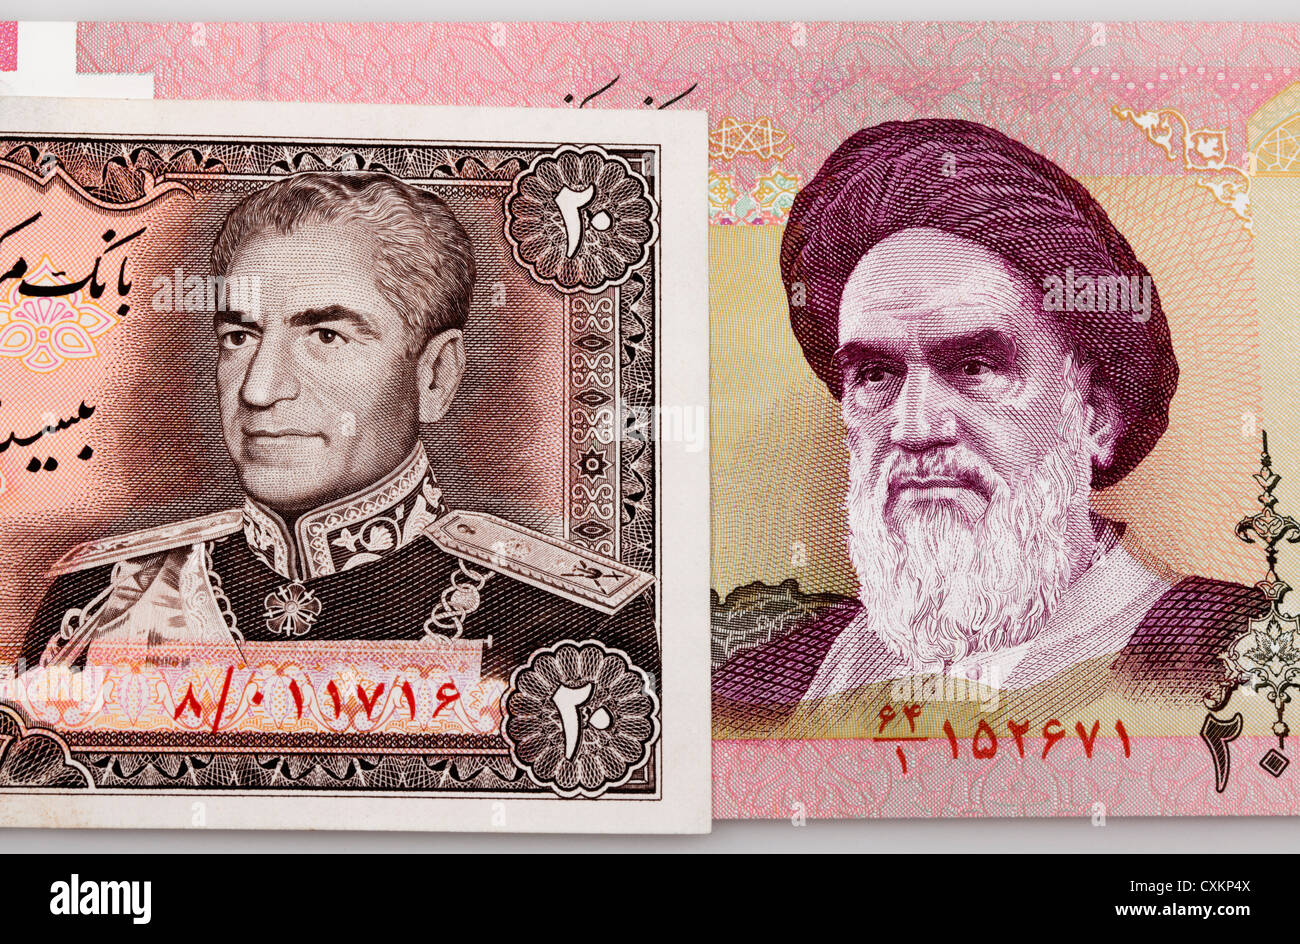 historic bank notes from Iran with portraits of Shah Mohammad Reza Pahlavi and Ruhollah Khomeini, Stock Photo